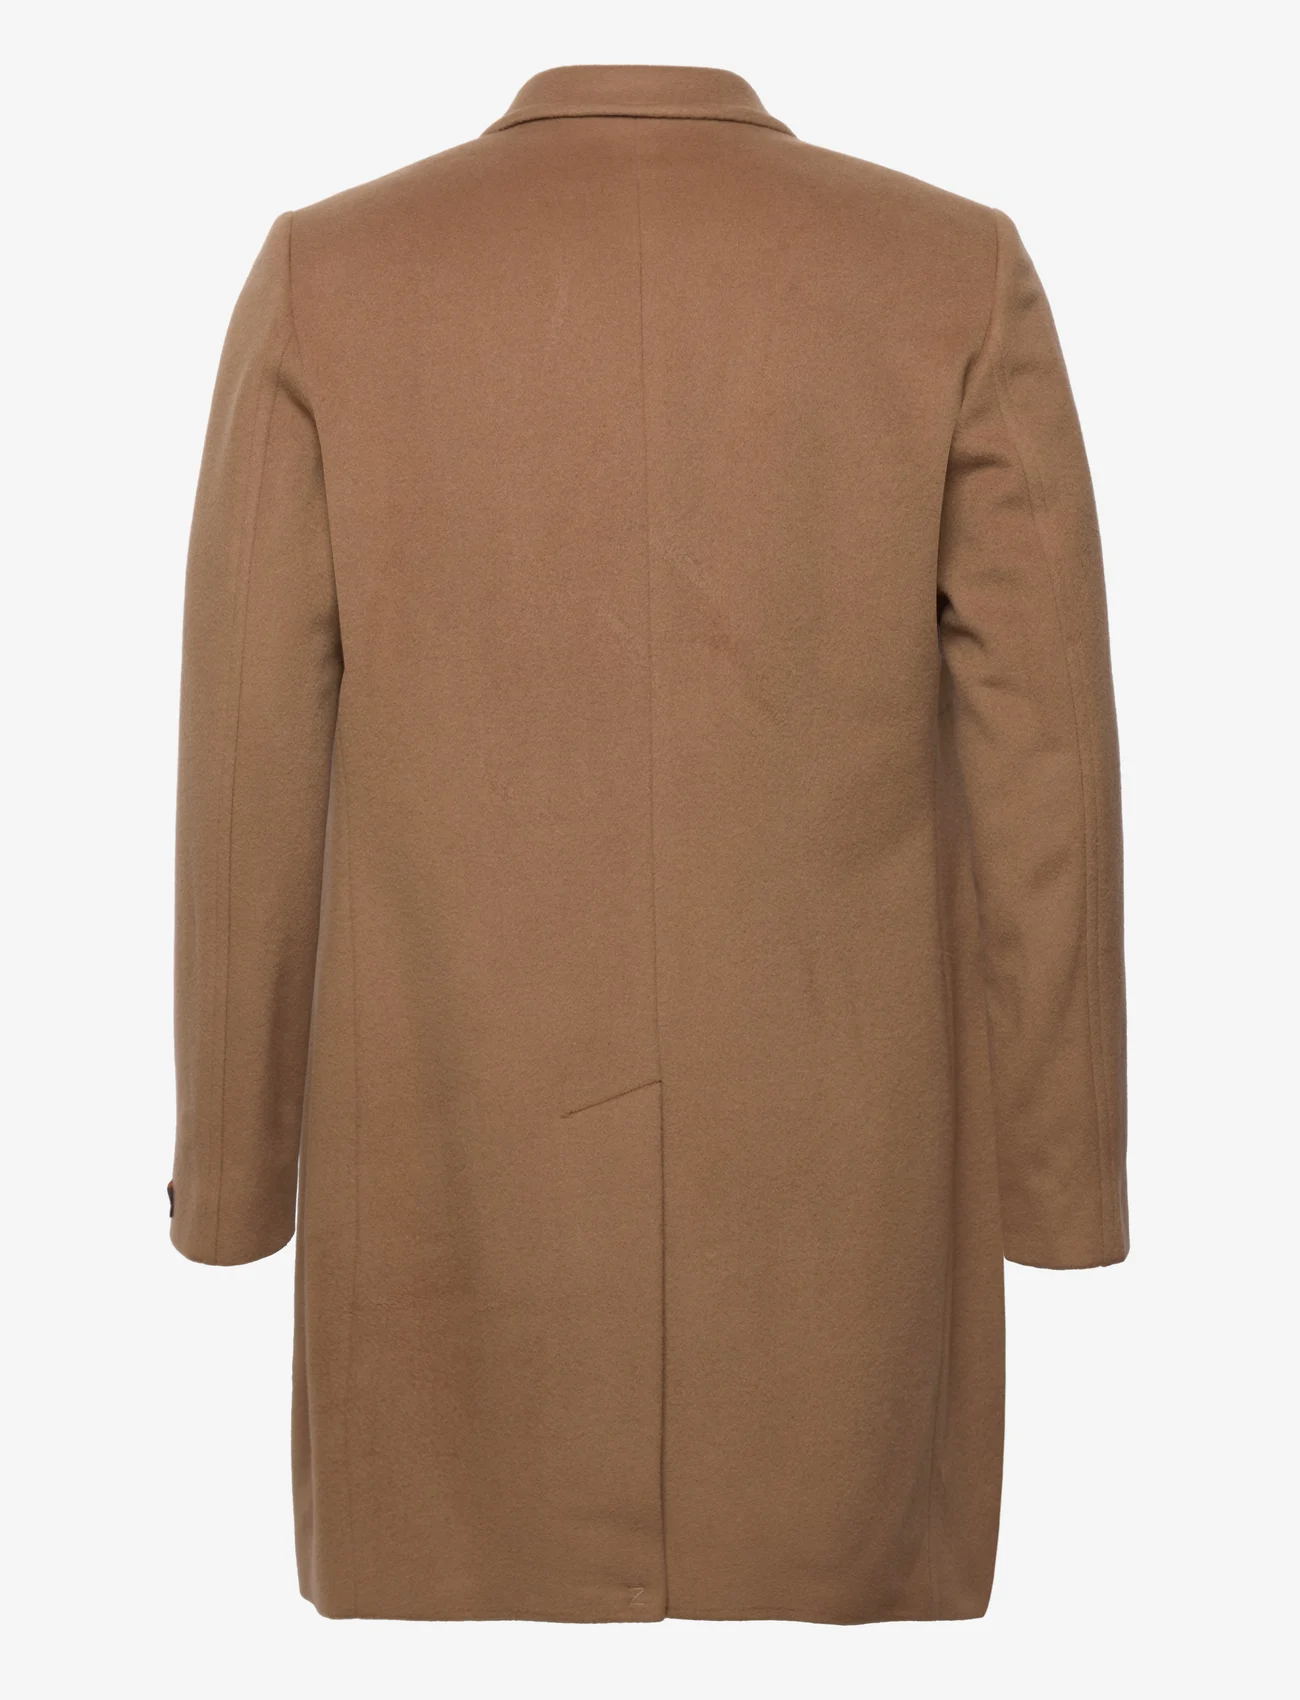 Morris - Morris Wool Cashmere Coat - winter jackets - camel - 1